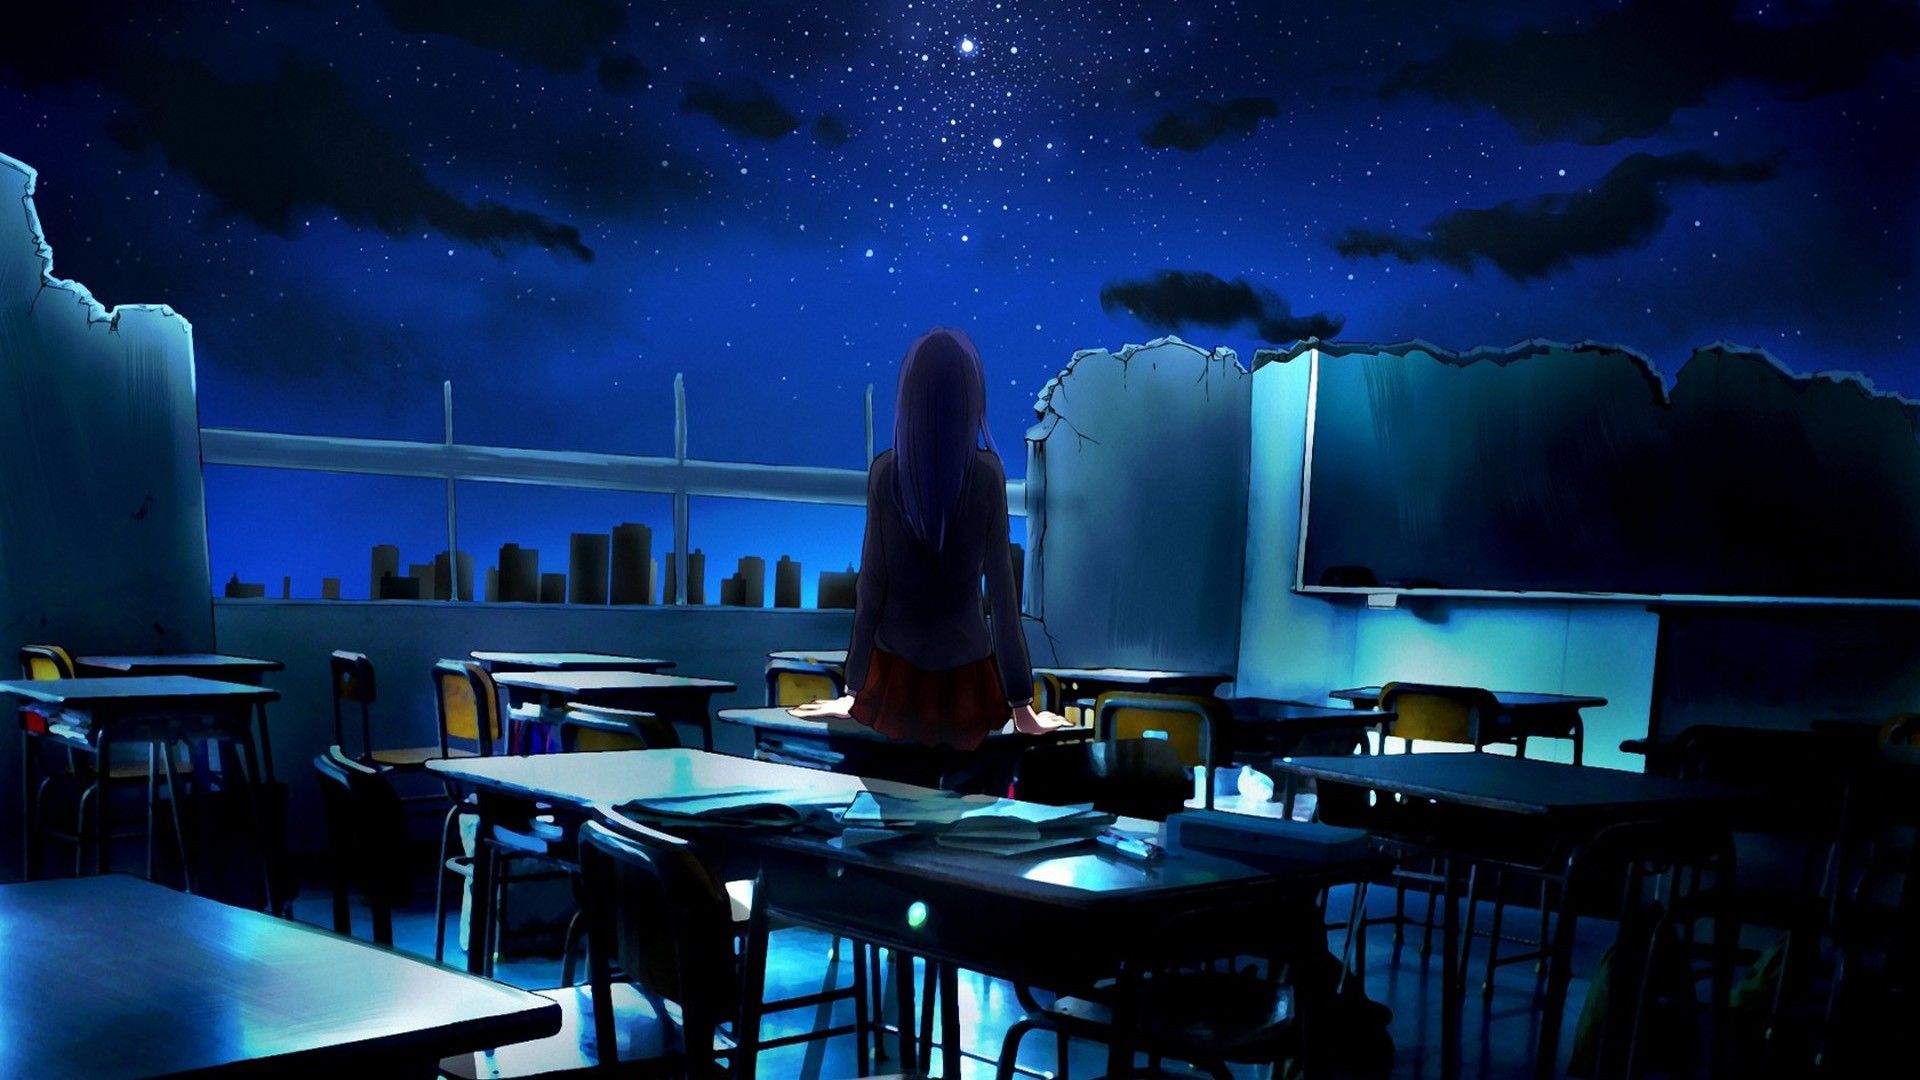 Anime girl desktop wallpaper praying in the ruins classroom under